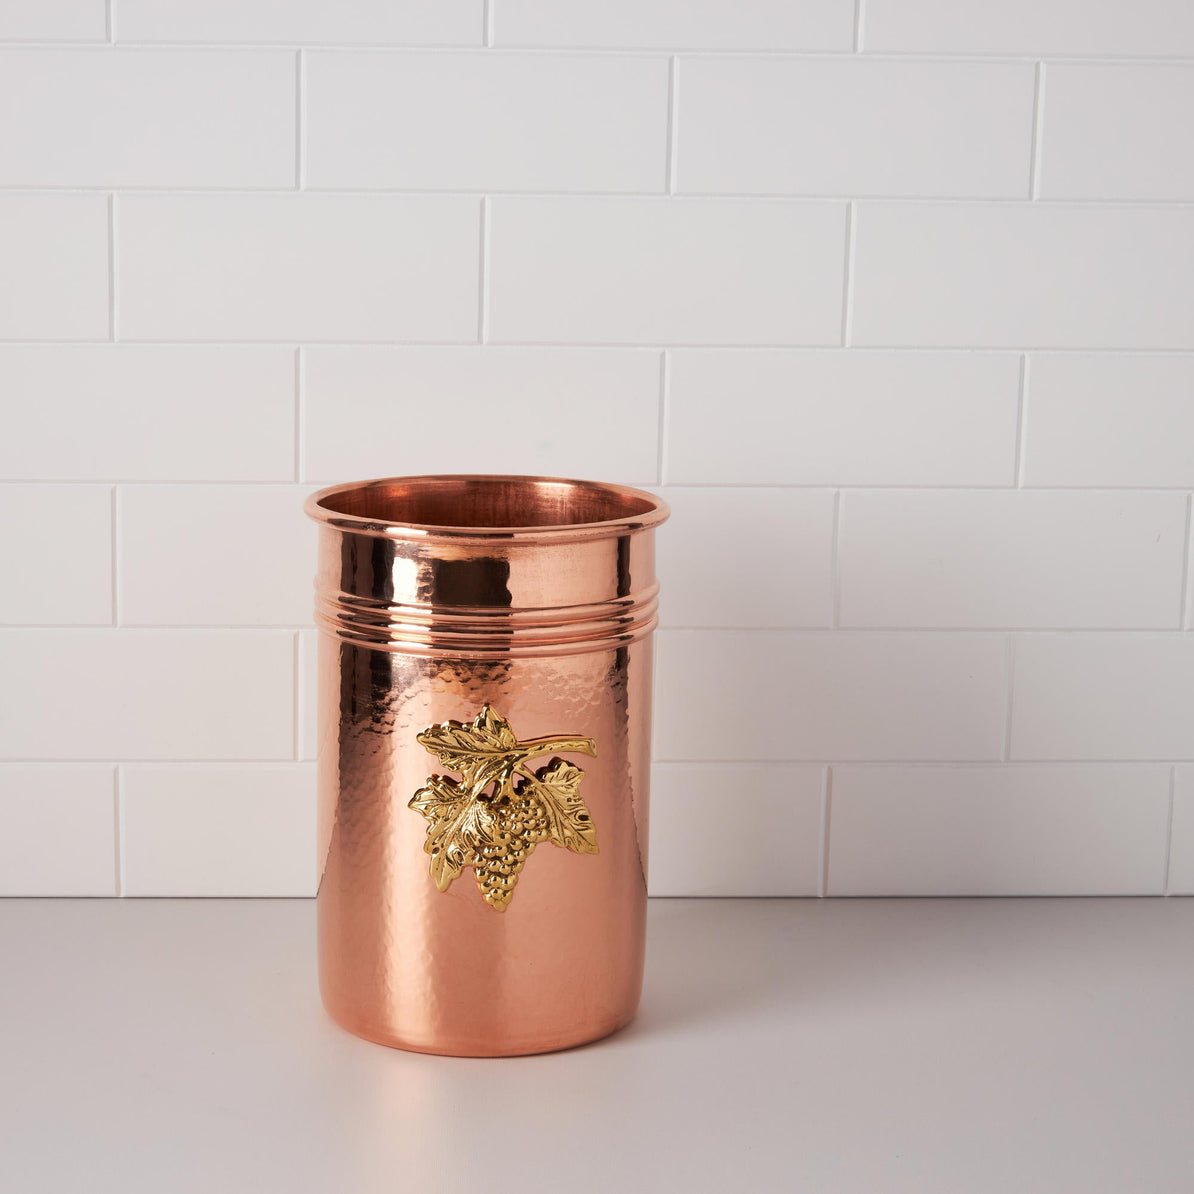 Ruffoni Italian Cookware | Copper Utensil Holder with Grape Emblem